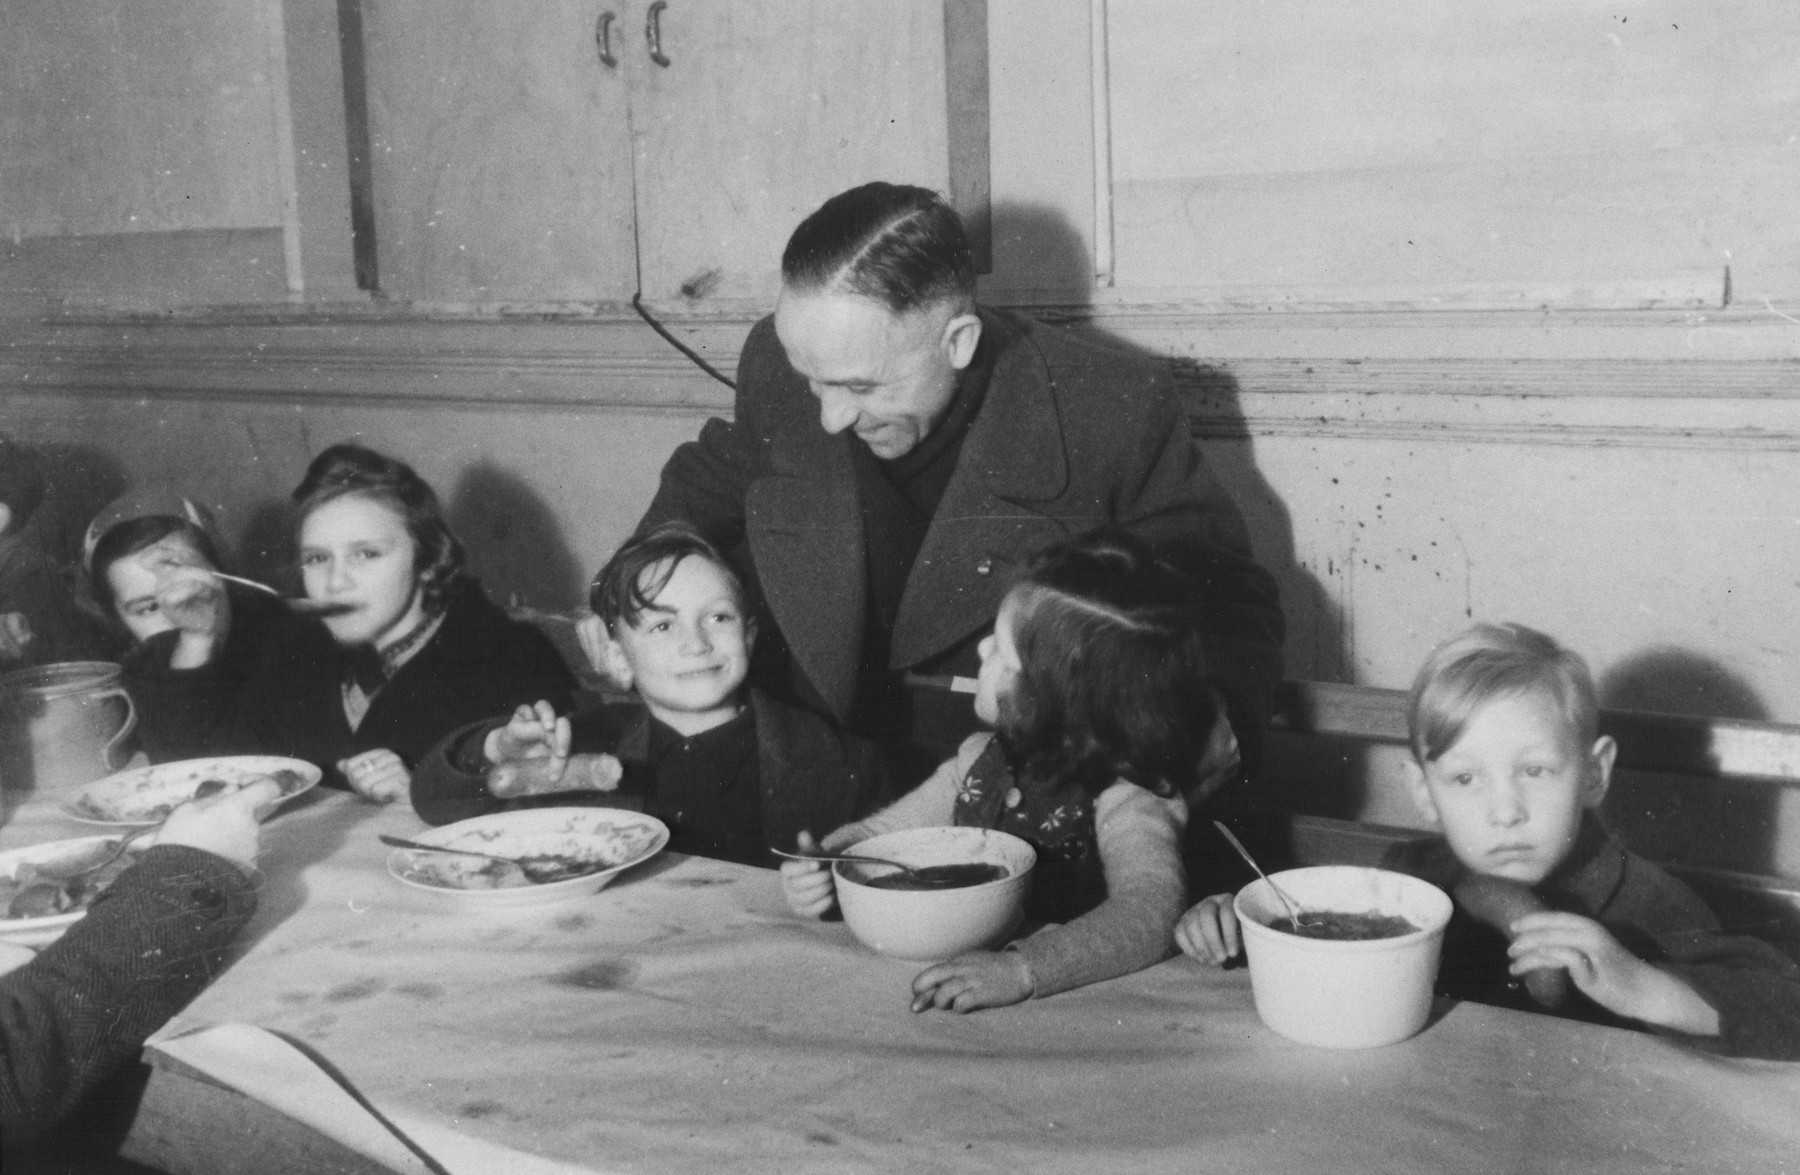 Carl Busch (standing) meets with DP children eating lunch in in the Jewish (Deutsche Juedische Jugend) school at the Berlin Chaplains' Center.